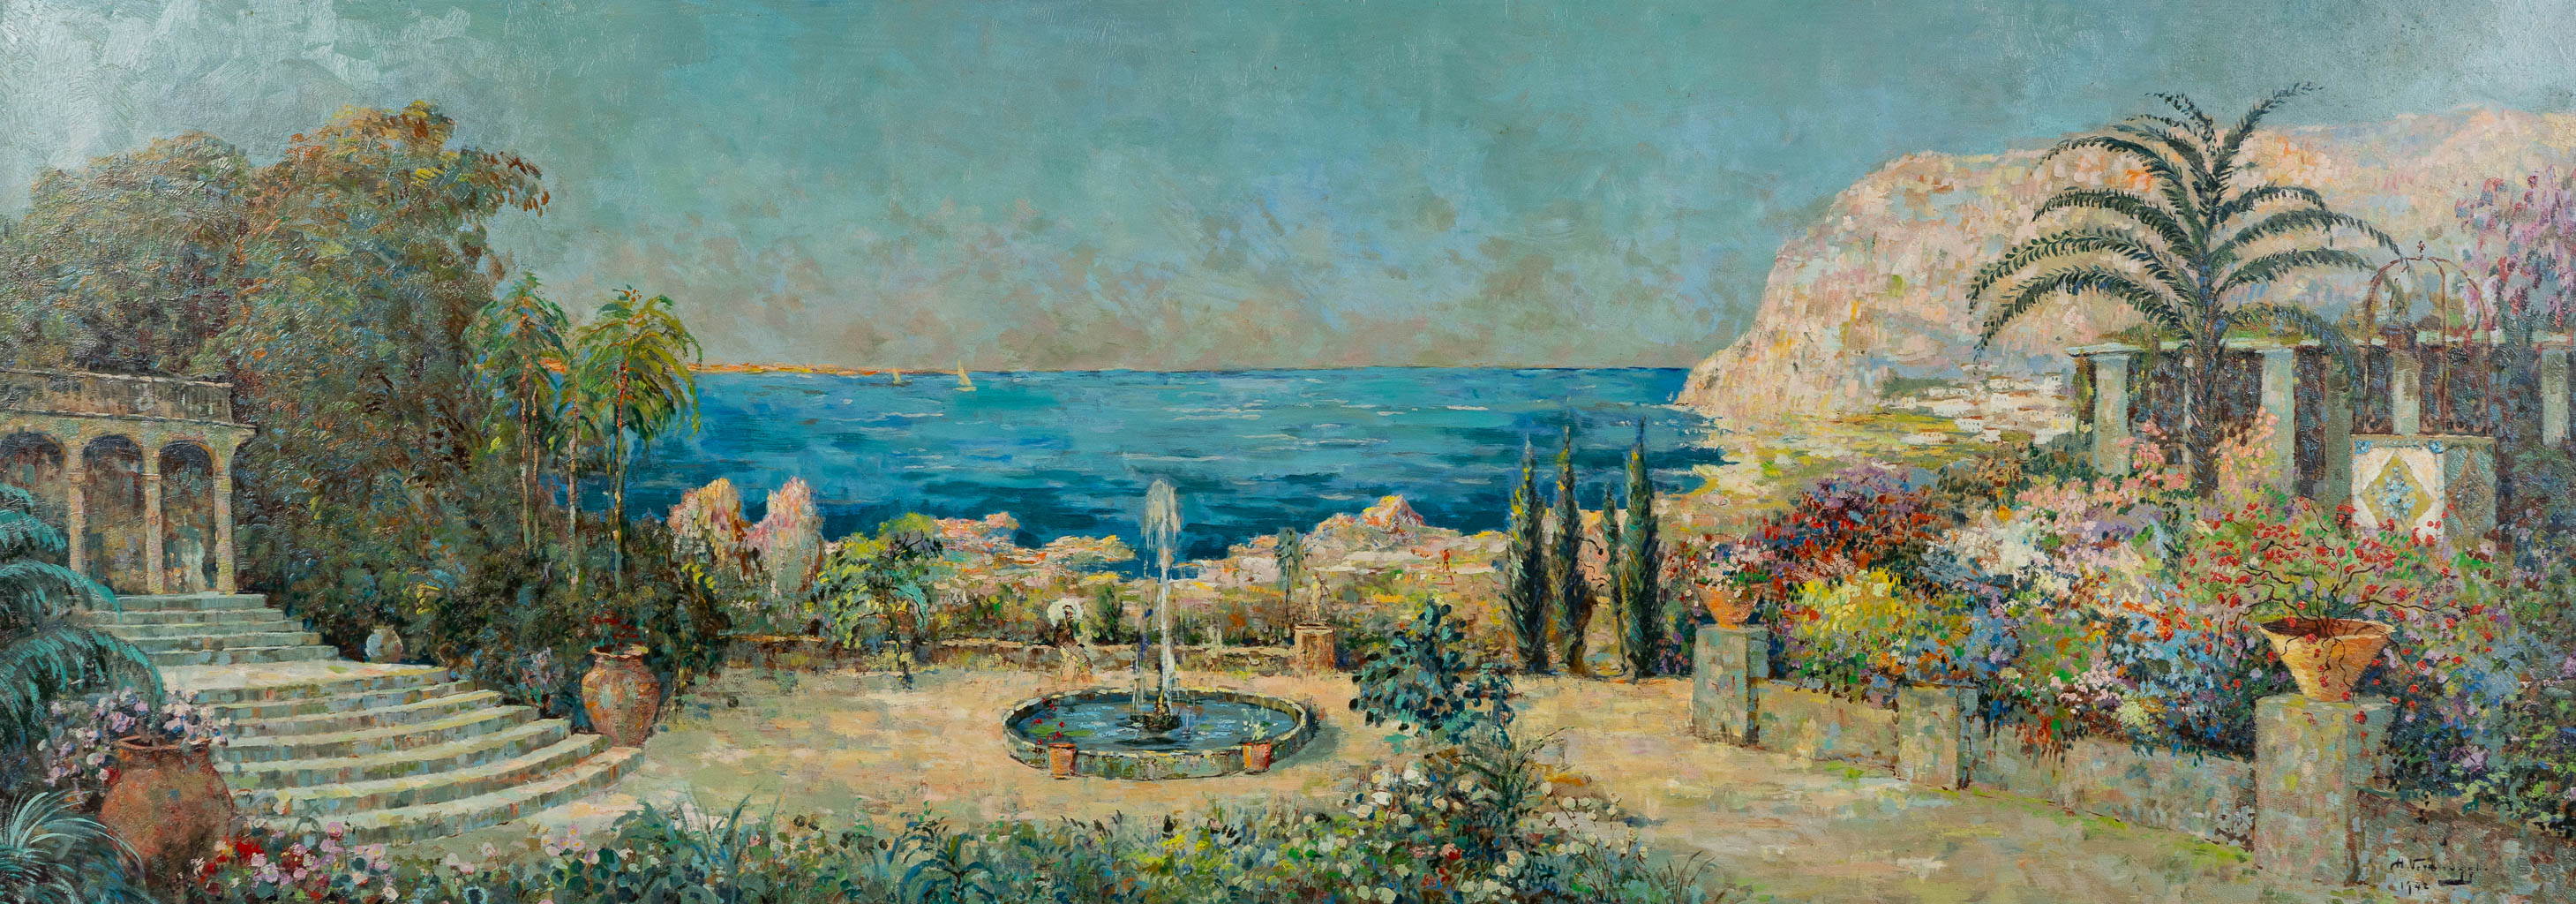  Charles VERBRUGGHE (1877-1974) 'The bay of Capri'